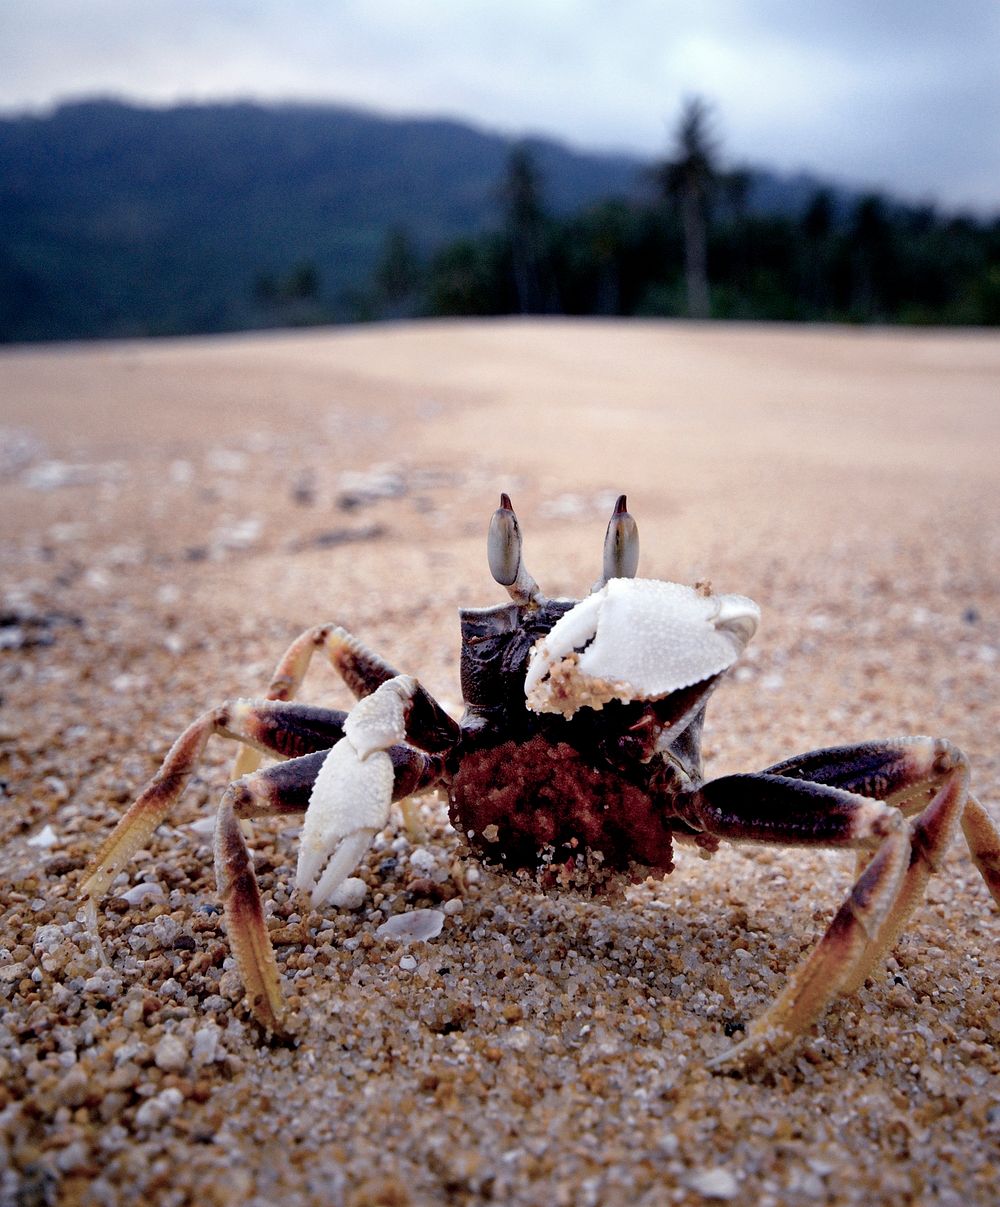 A crab on a sandy beach